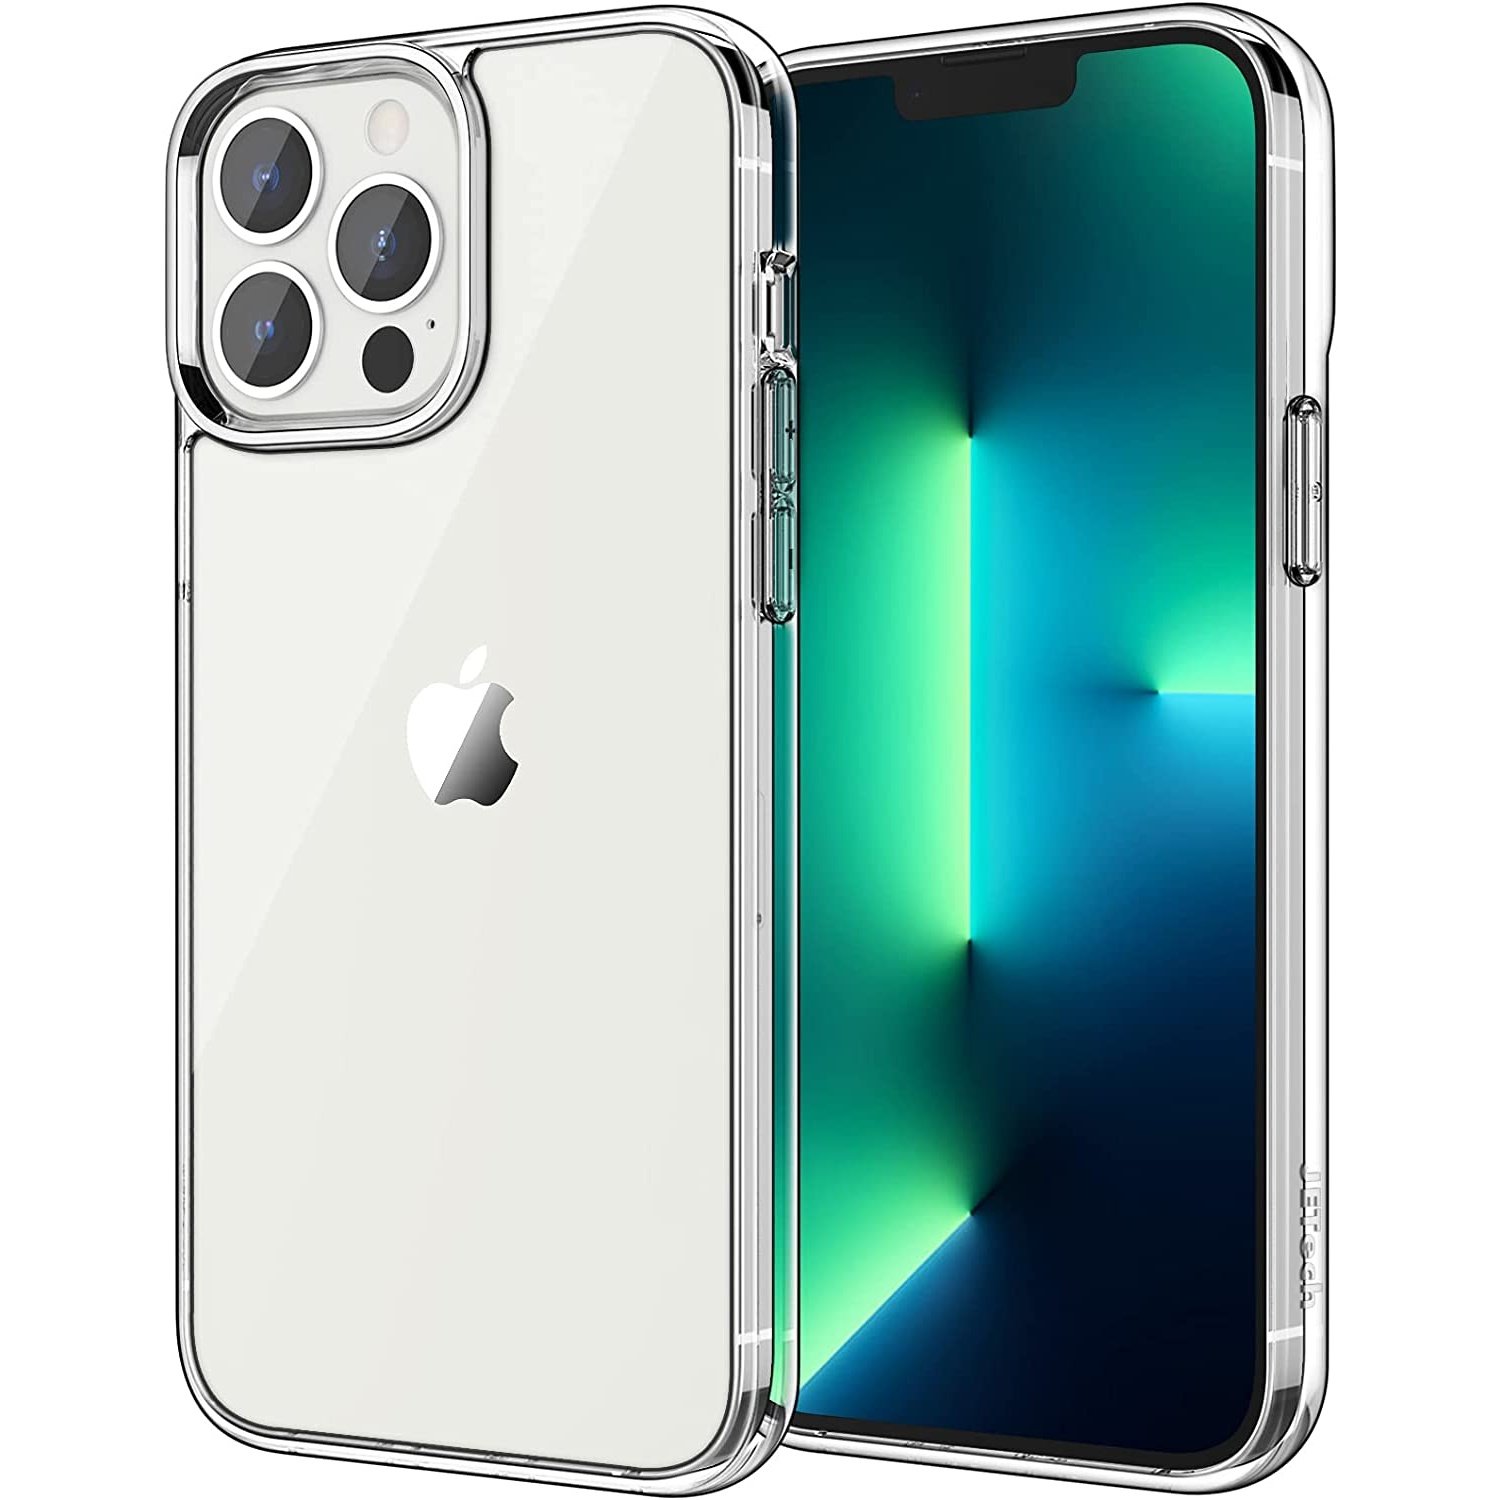 Funda Rudo Case + Mica Cristal Para iPhone 11 Pro 12 Pro Max